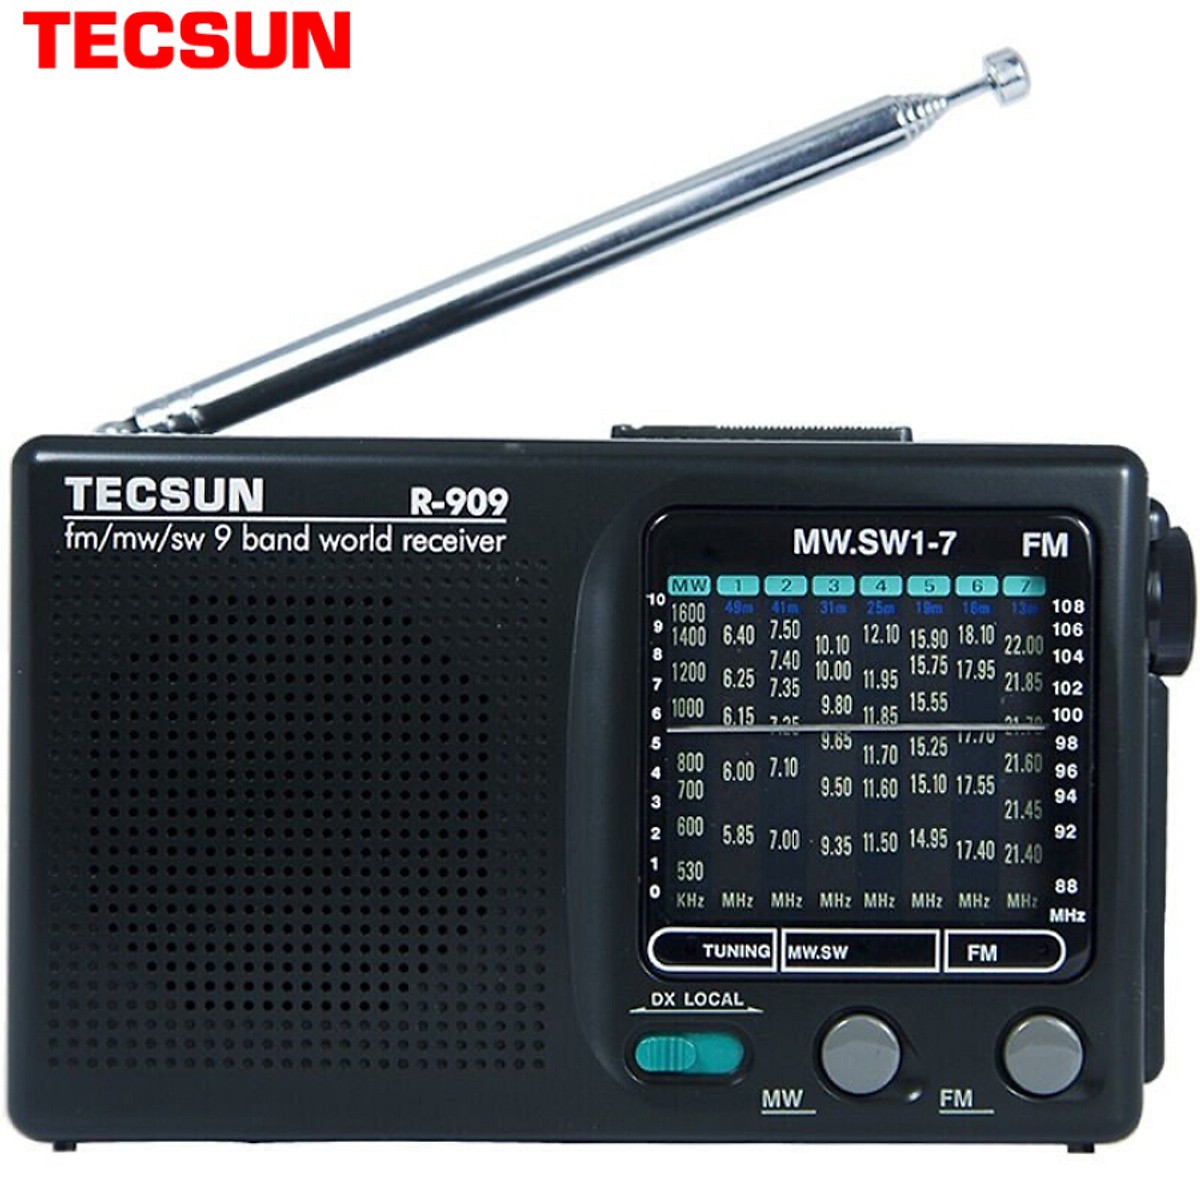 Radio Tecsun R-909